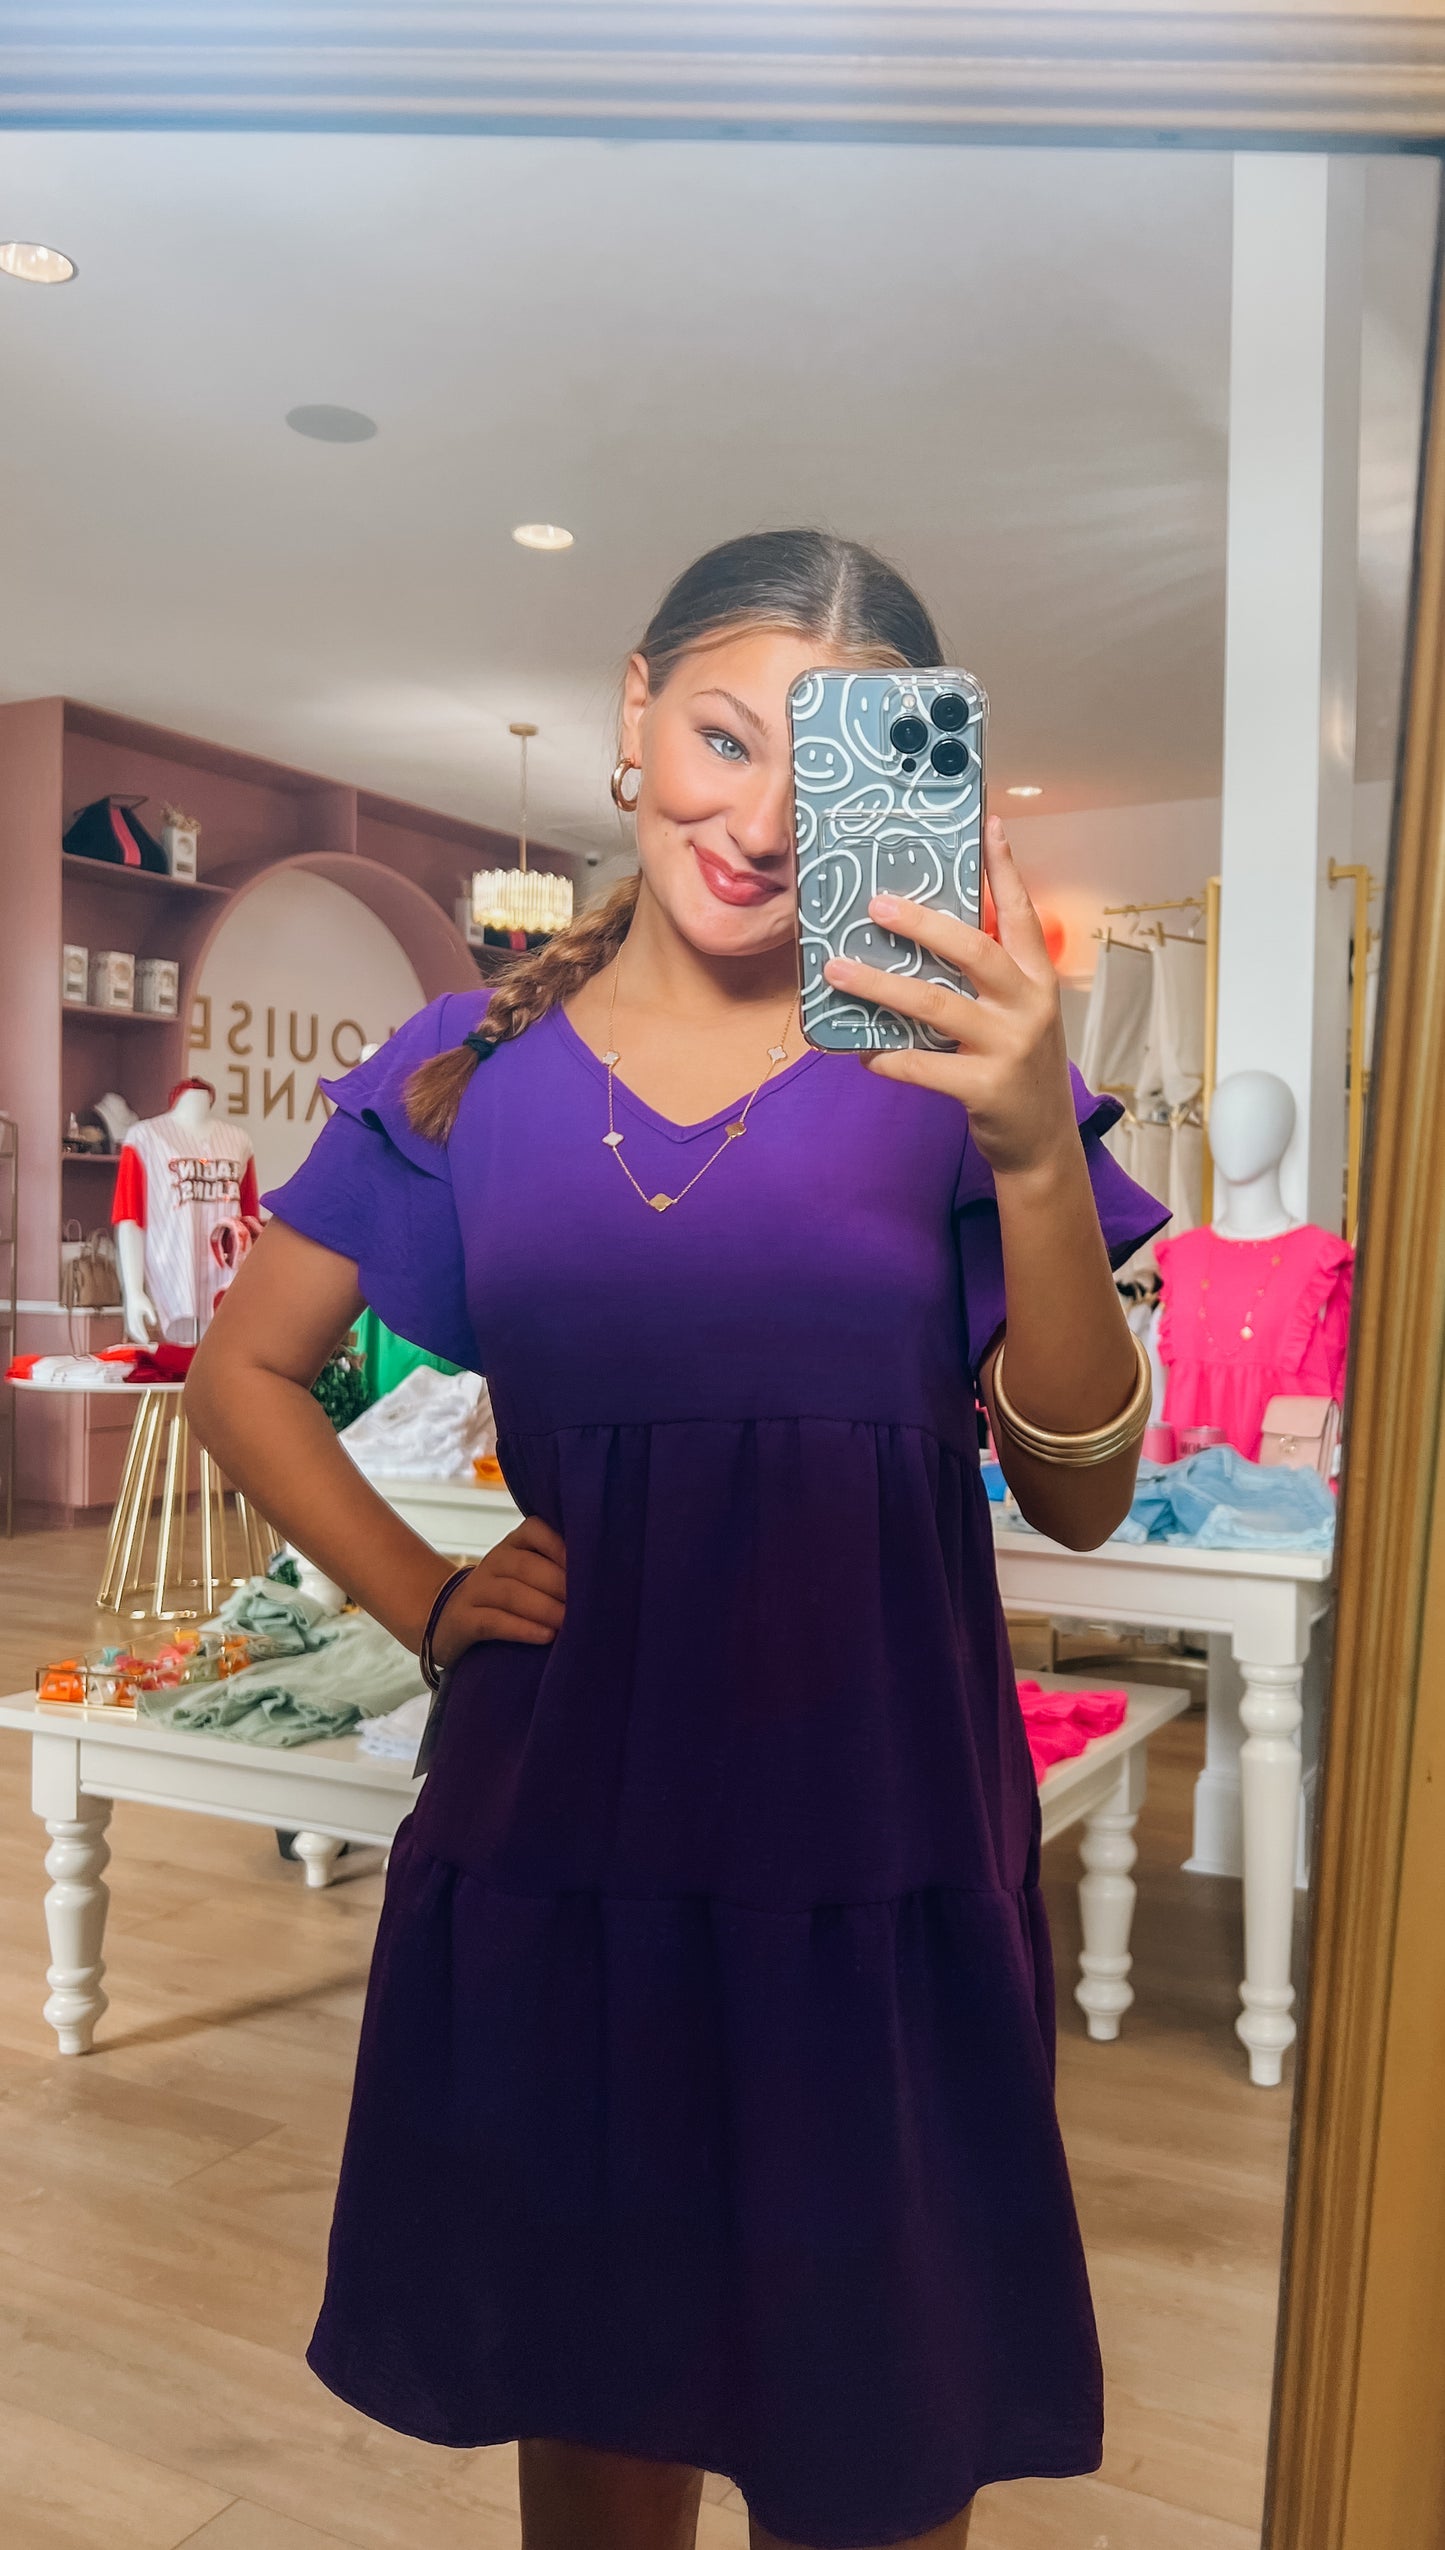 Purple Short Sleeve Dress